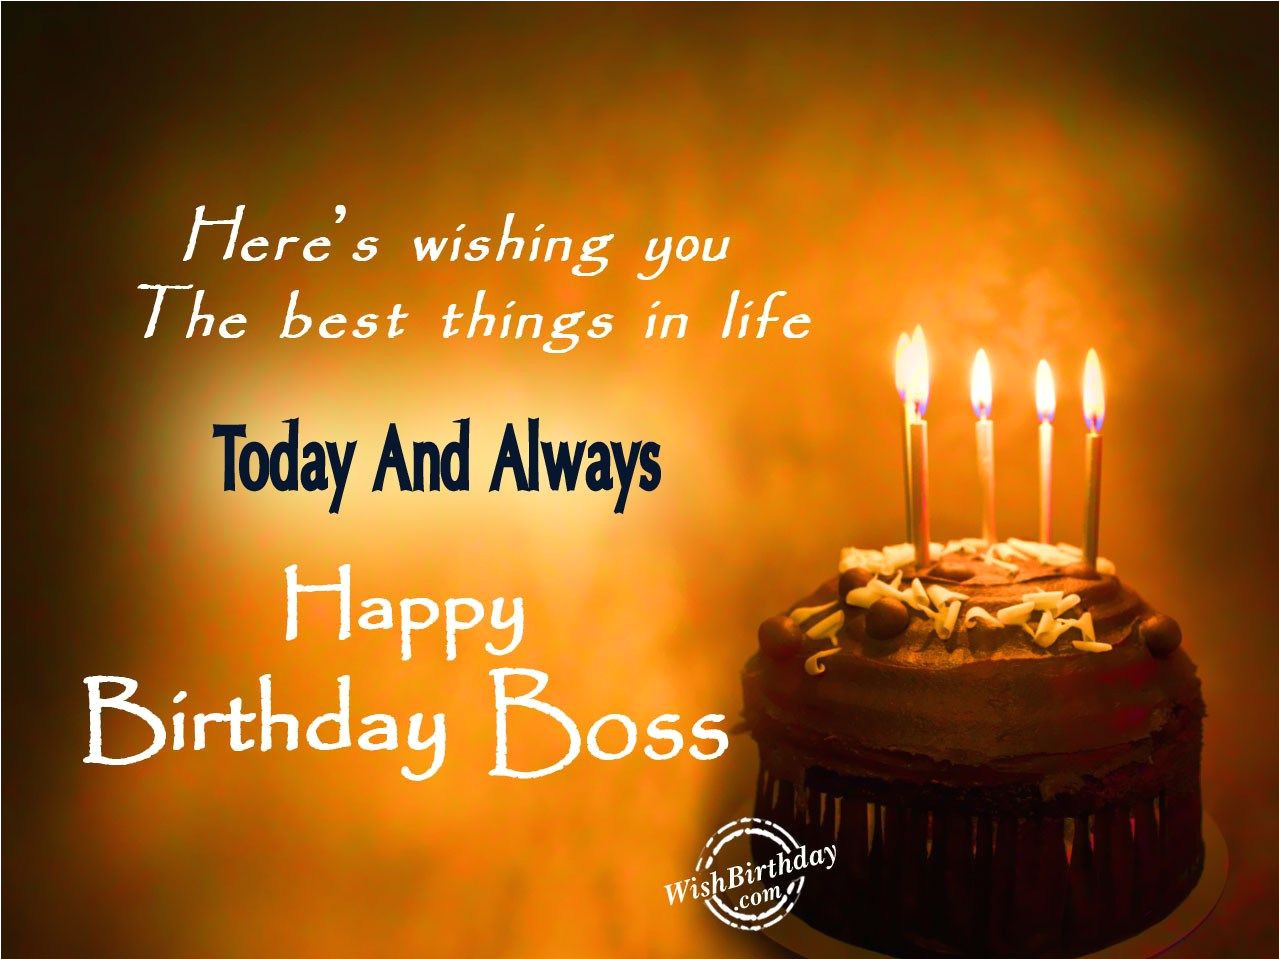 Happy Birthday Card On Facebook Code Url Http Azbirthdaywishes Birthday Wishes for Boss